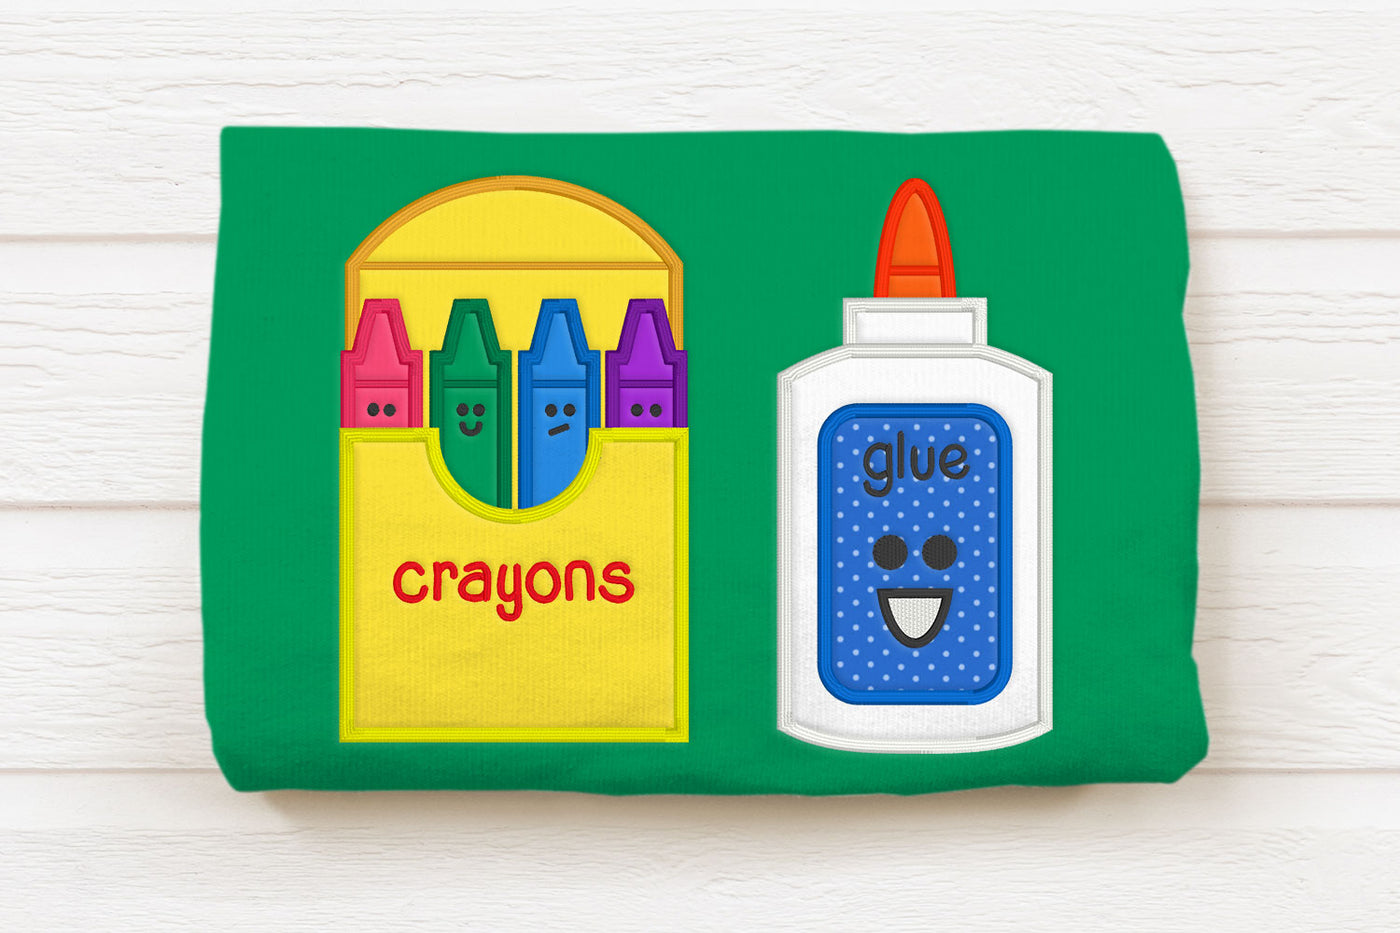 glue bottle and crayon box applique embroidery design